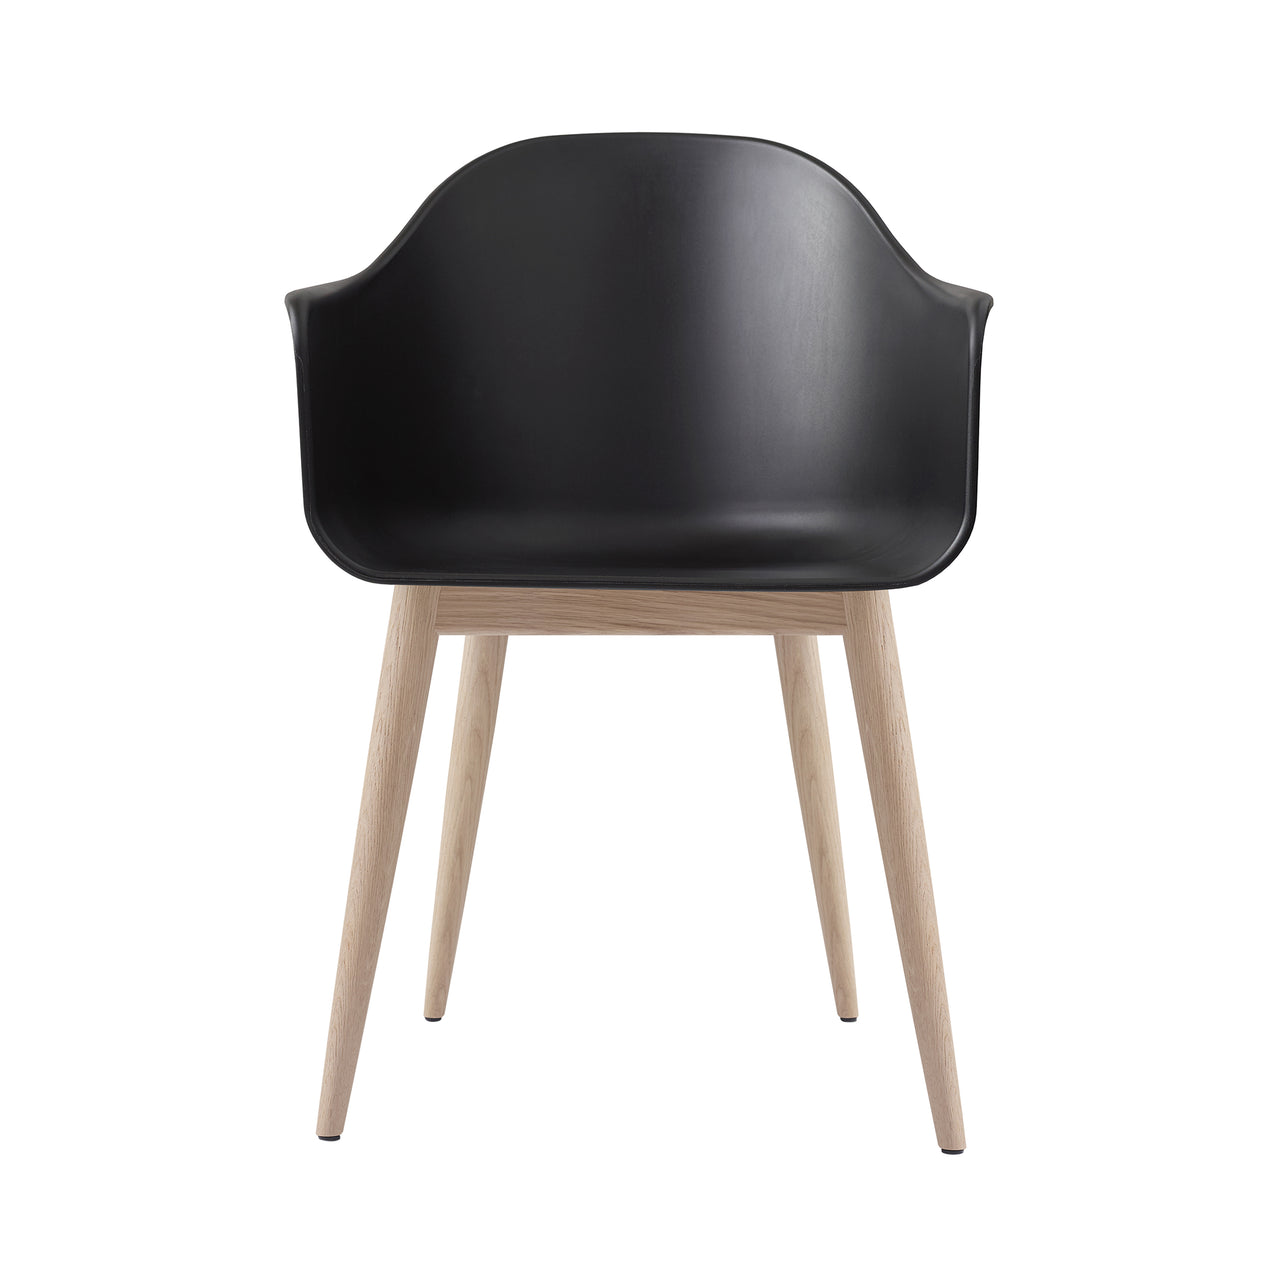 Harbour Dining Chair: Wood Base + Natural Oak + Black